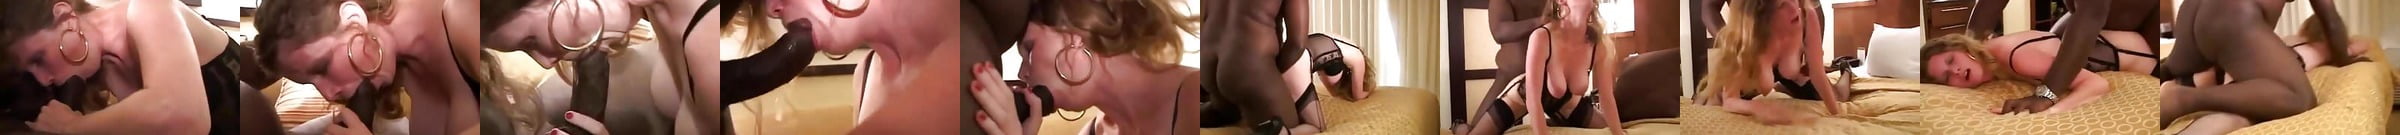 Lingerie Wife Porn Videos XHamster